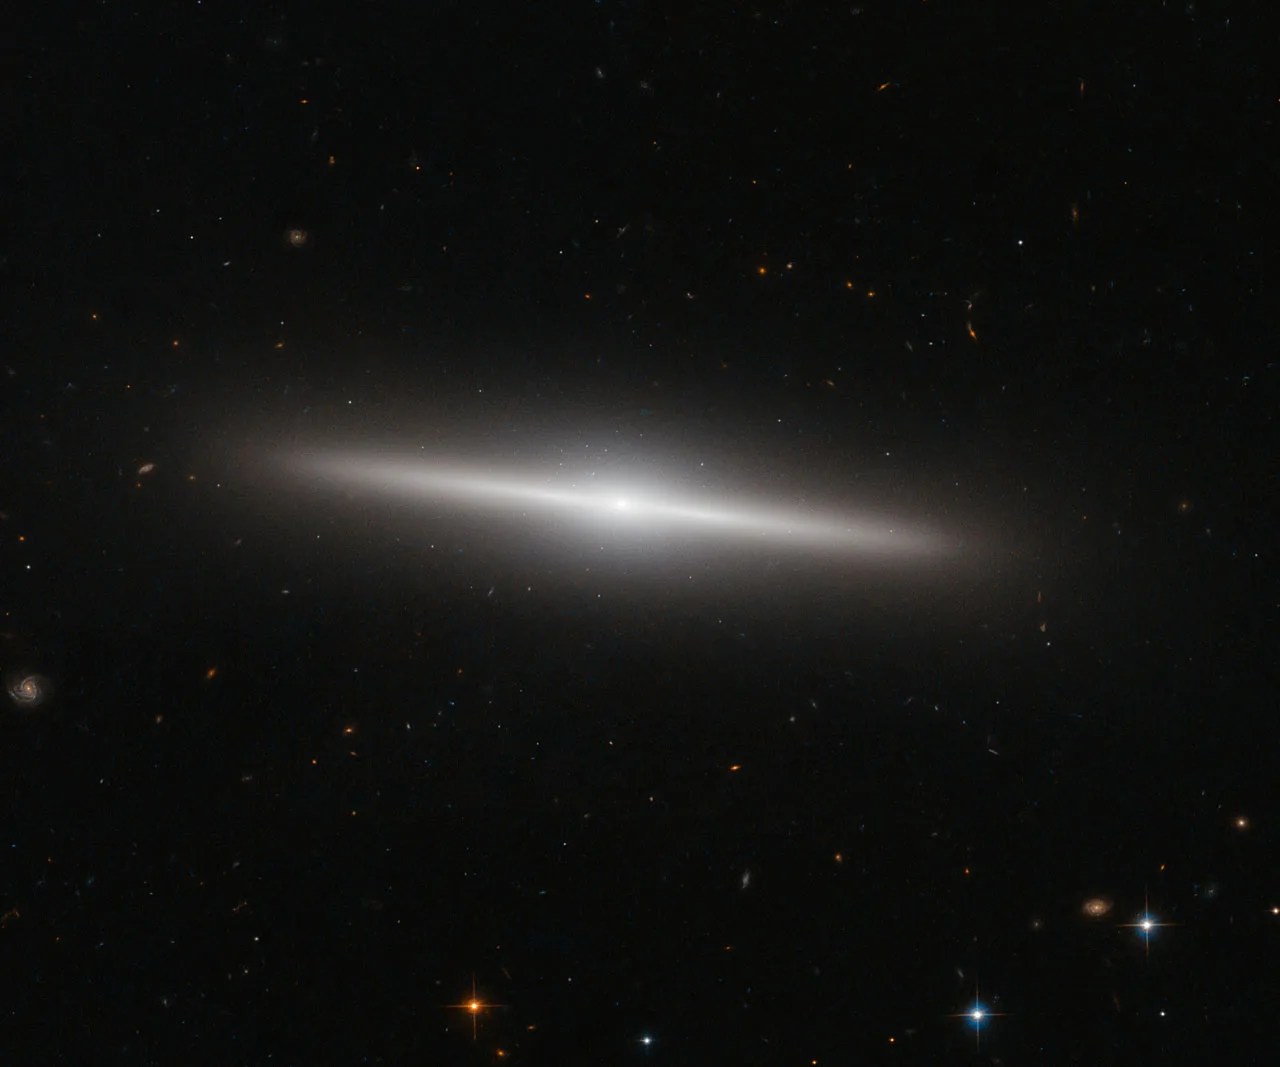 A delicate side-on galaxy in a field of black